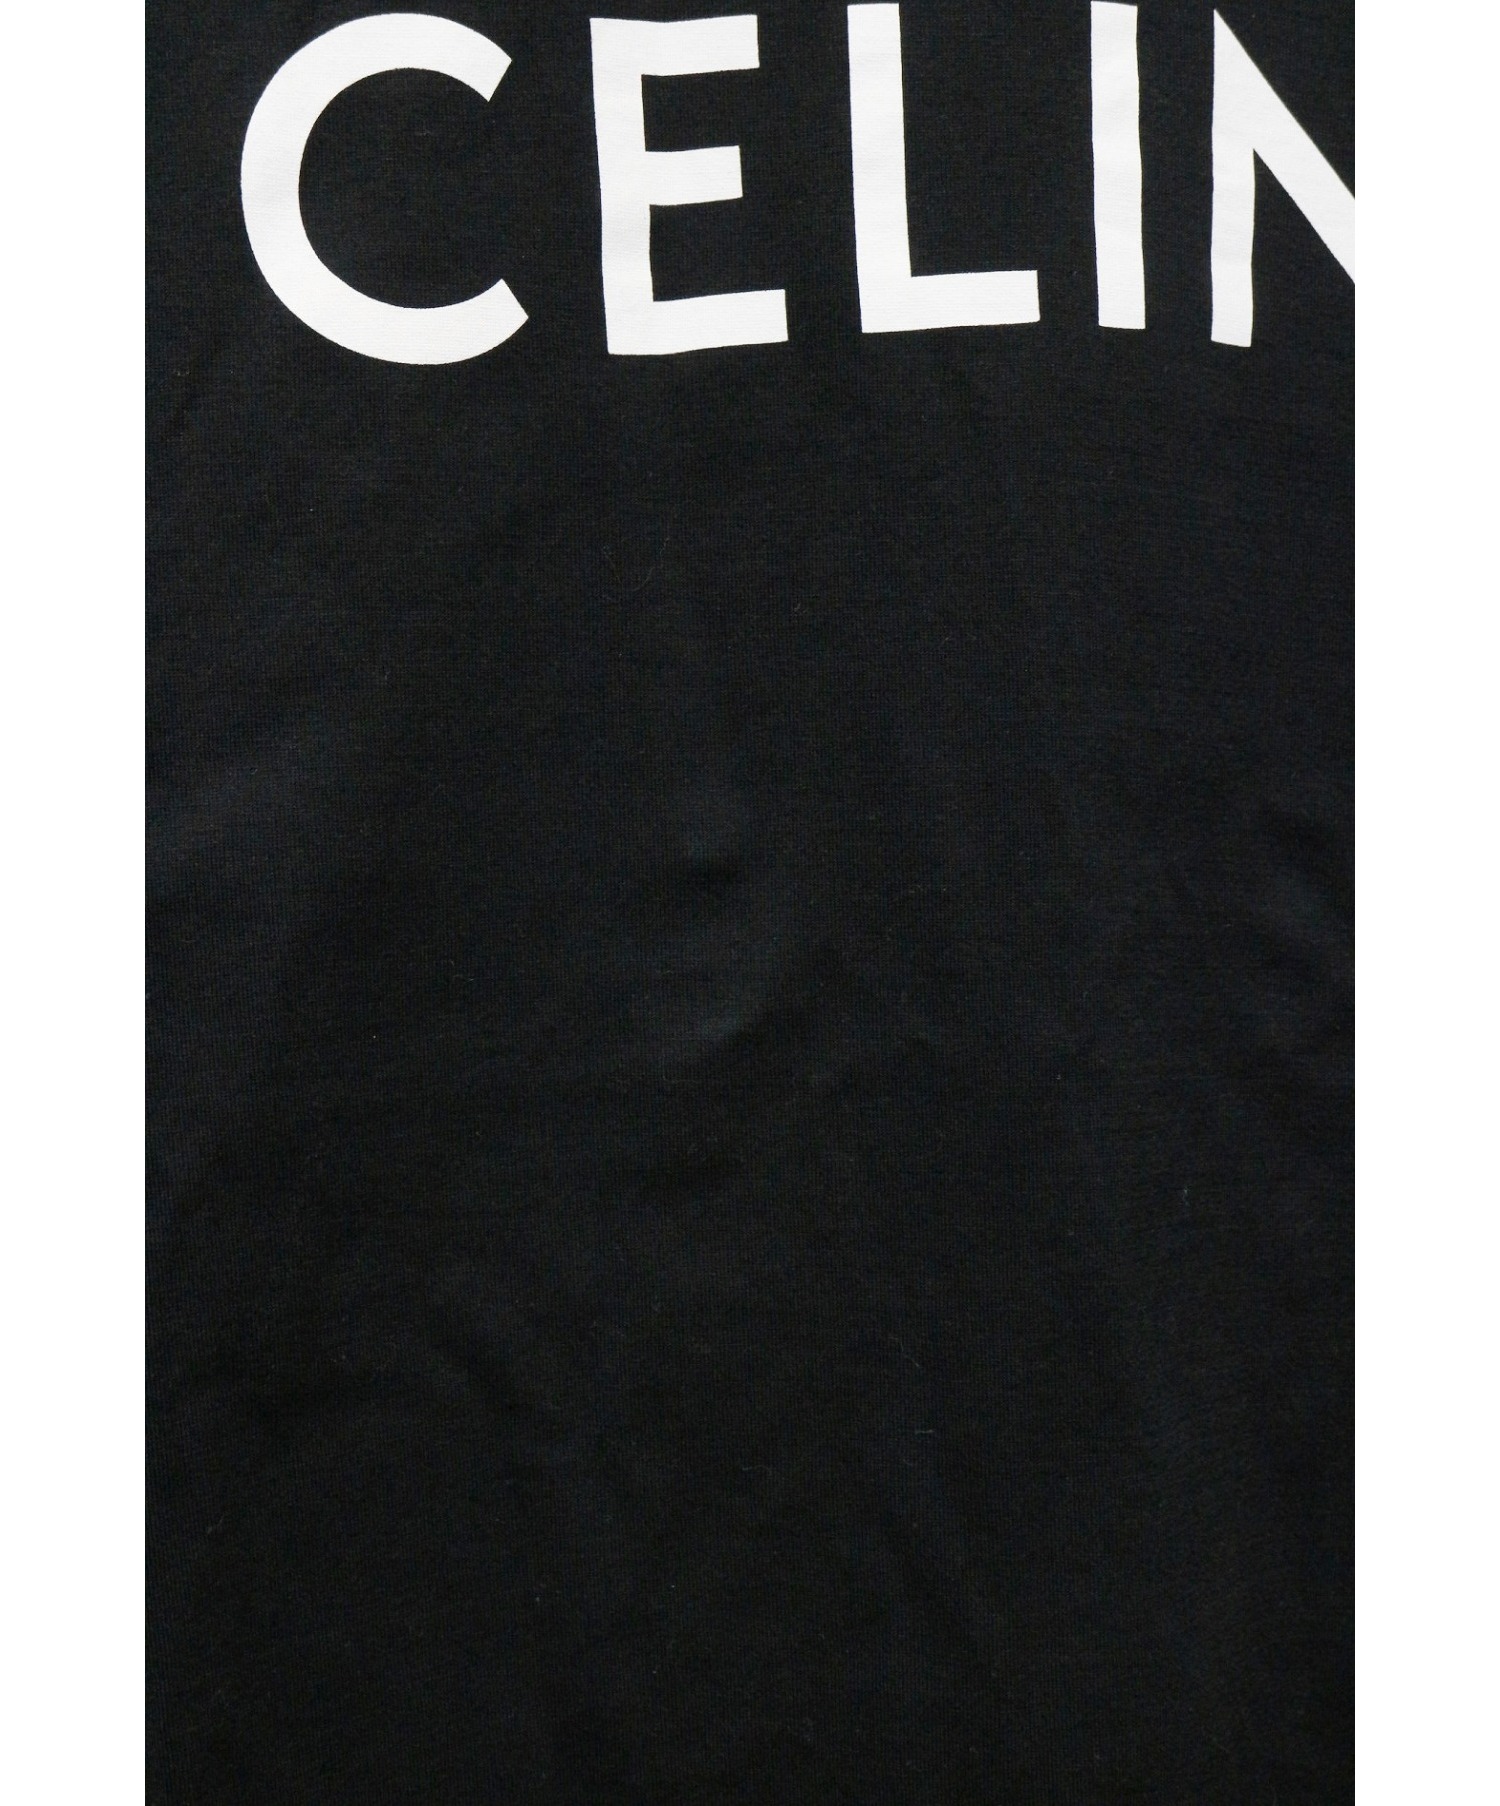 CELINE (セリーヌ) ロゴプリントTシャツ ブラック サイズ:L